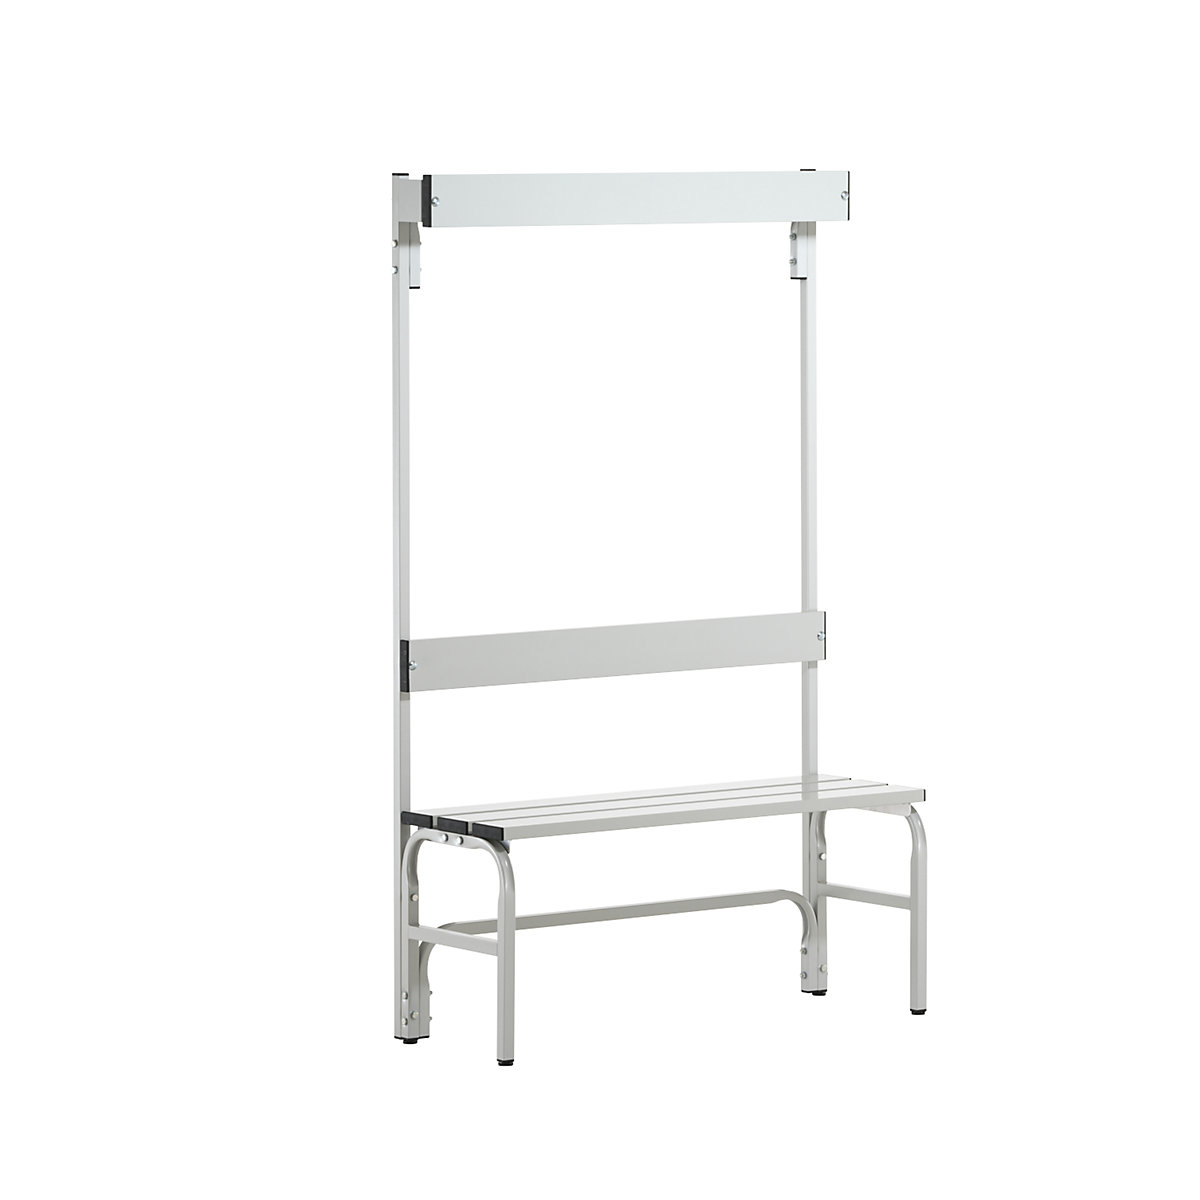 Changing room bench with aluminium slats – Sypro